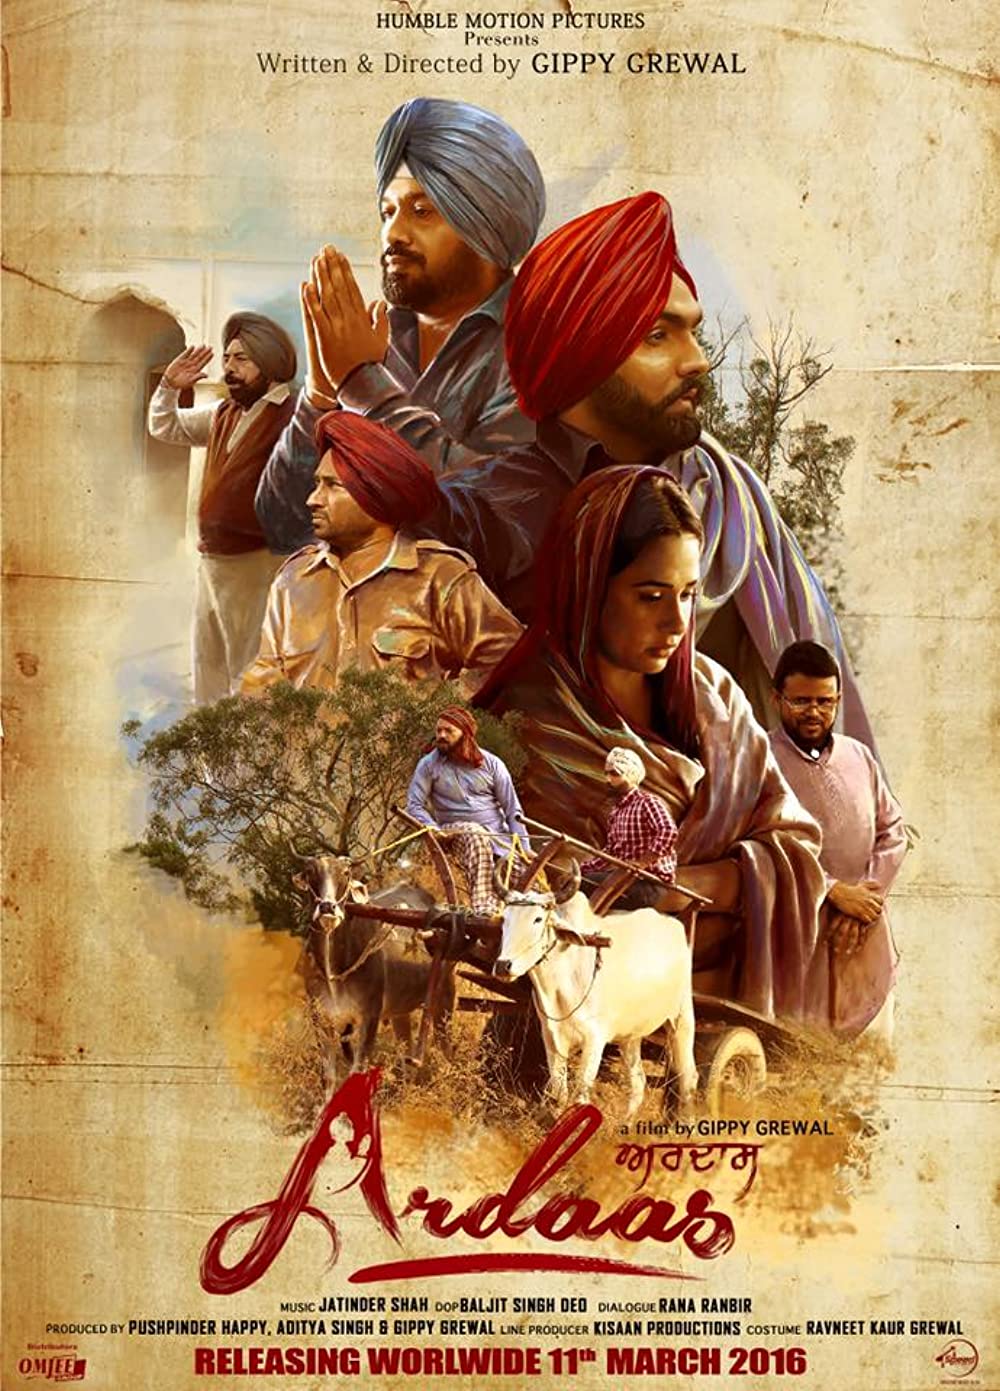 15 Best Punjabi Movies on Amazon Prime You Should Watch Immediately